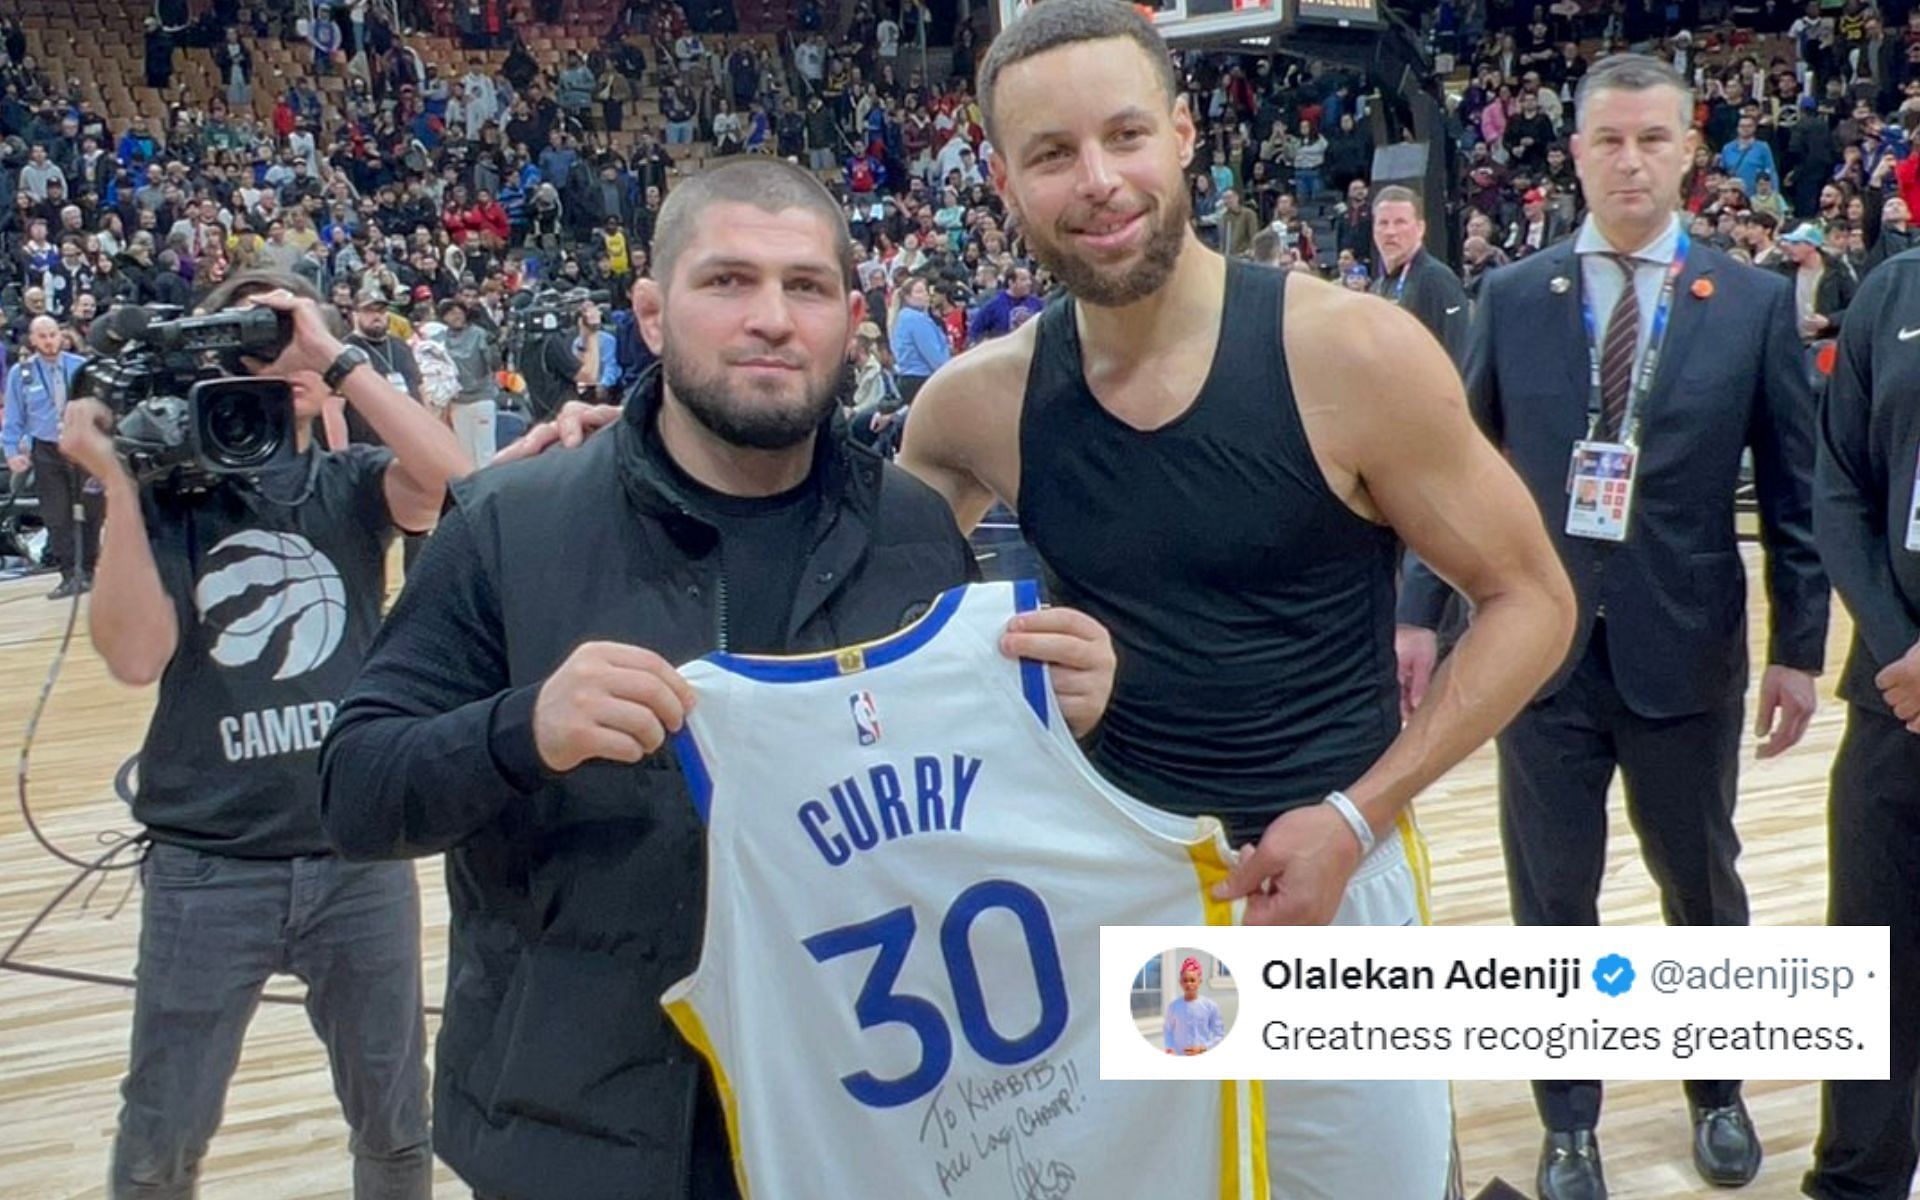 Legends watching legends" - Fans react to Khabib Nurmagomedov praising NBA  star Stephen Curry at the Golden State Warriors vs. Toronto Raptors game